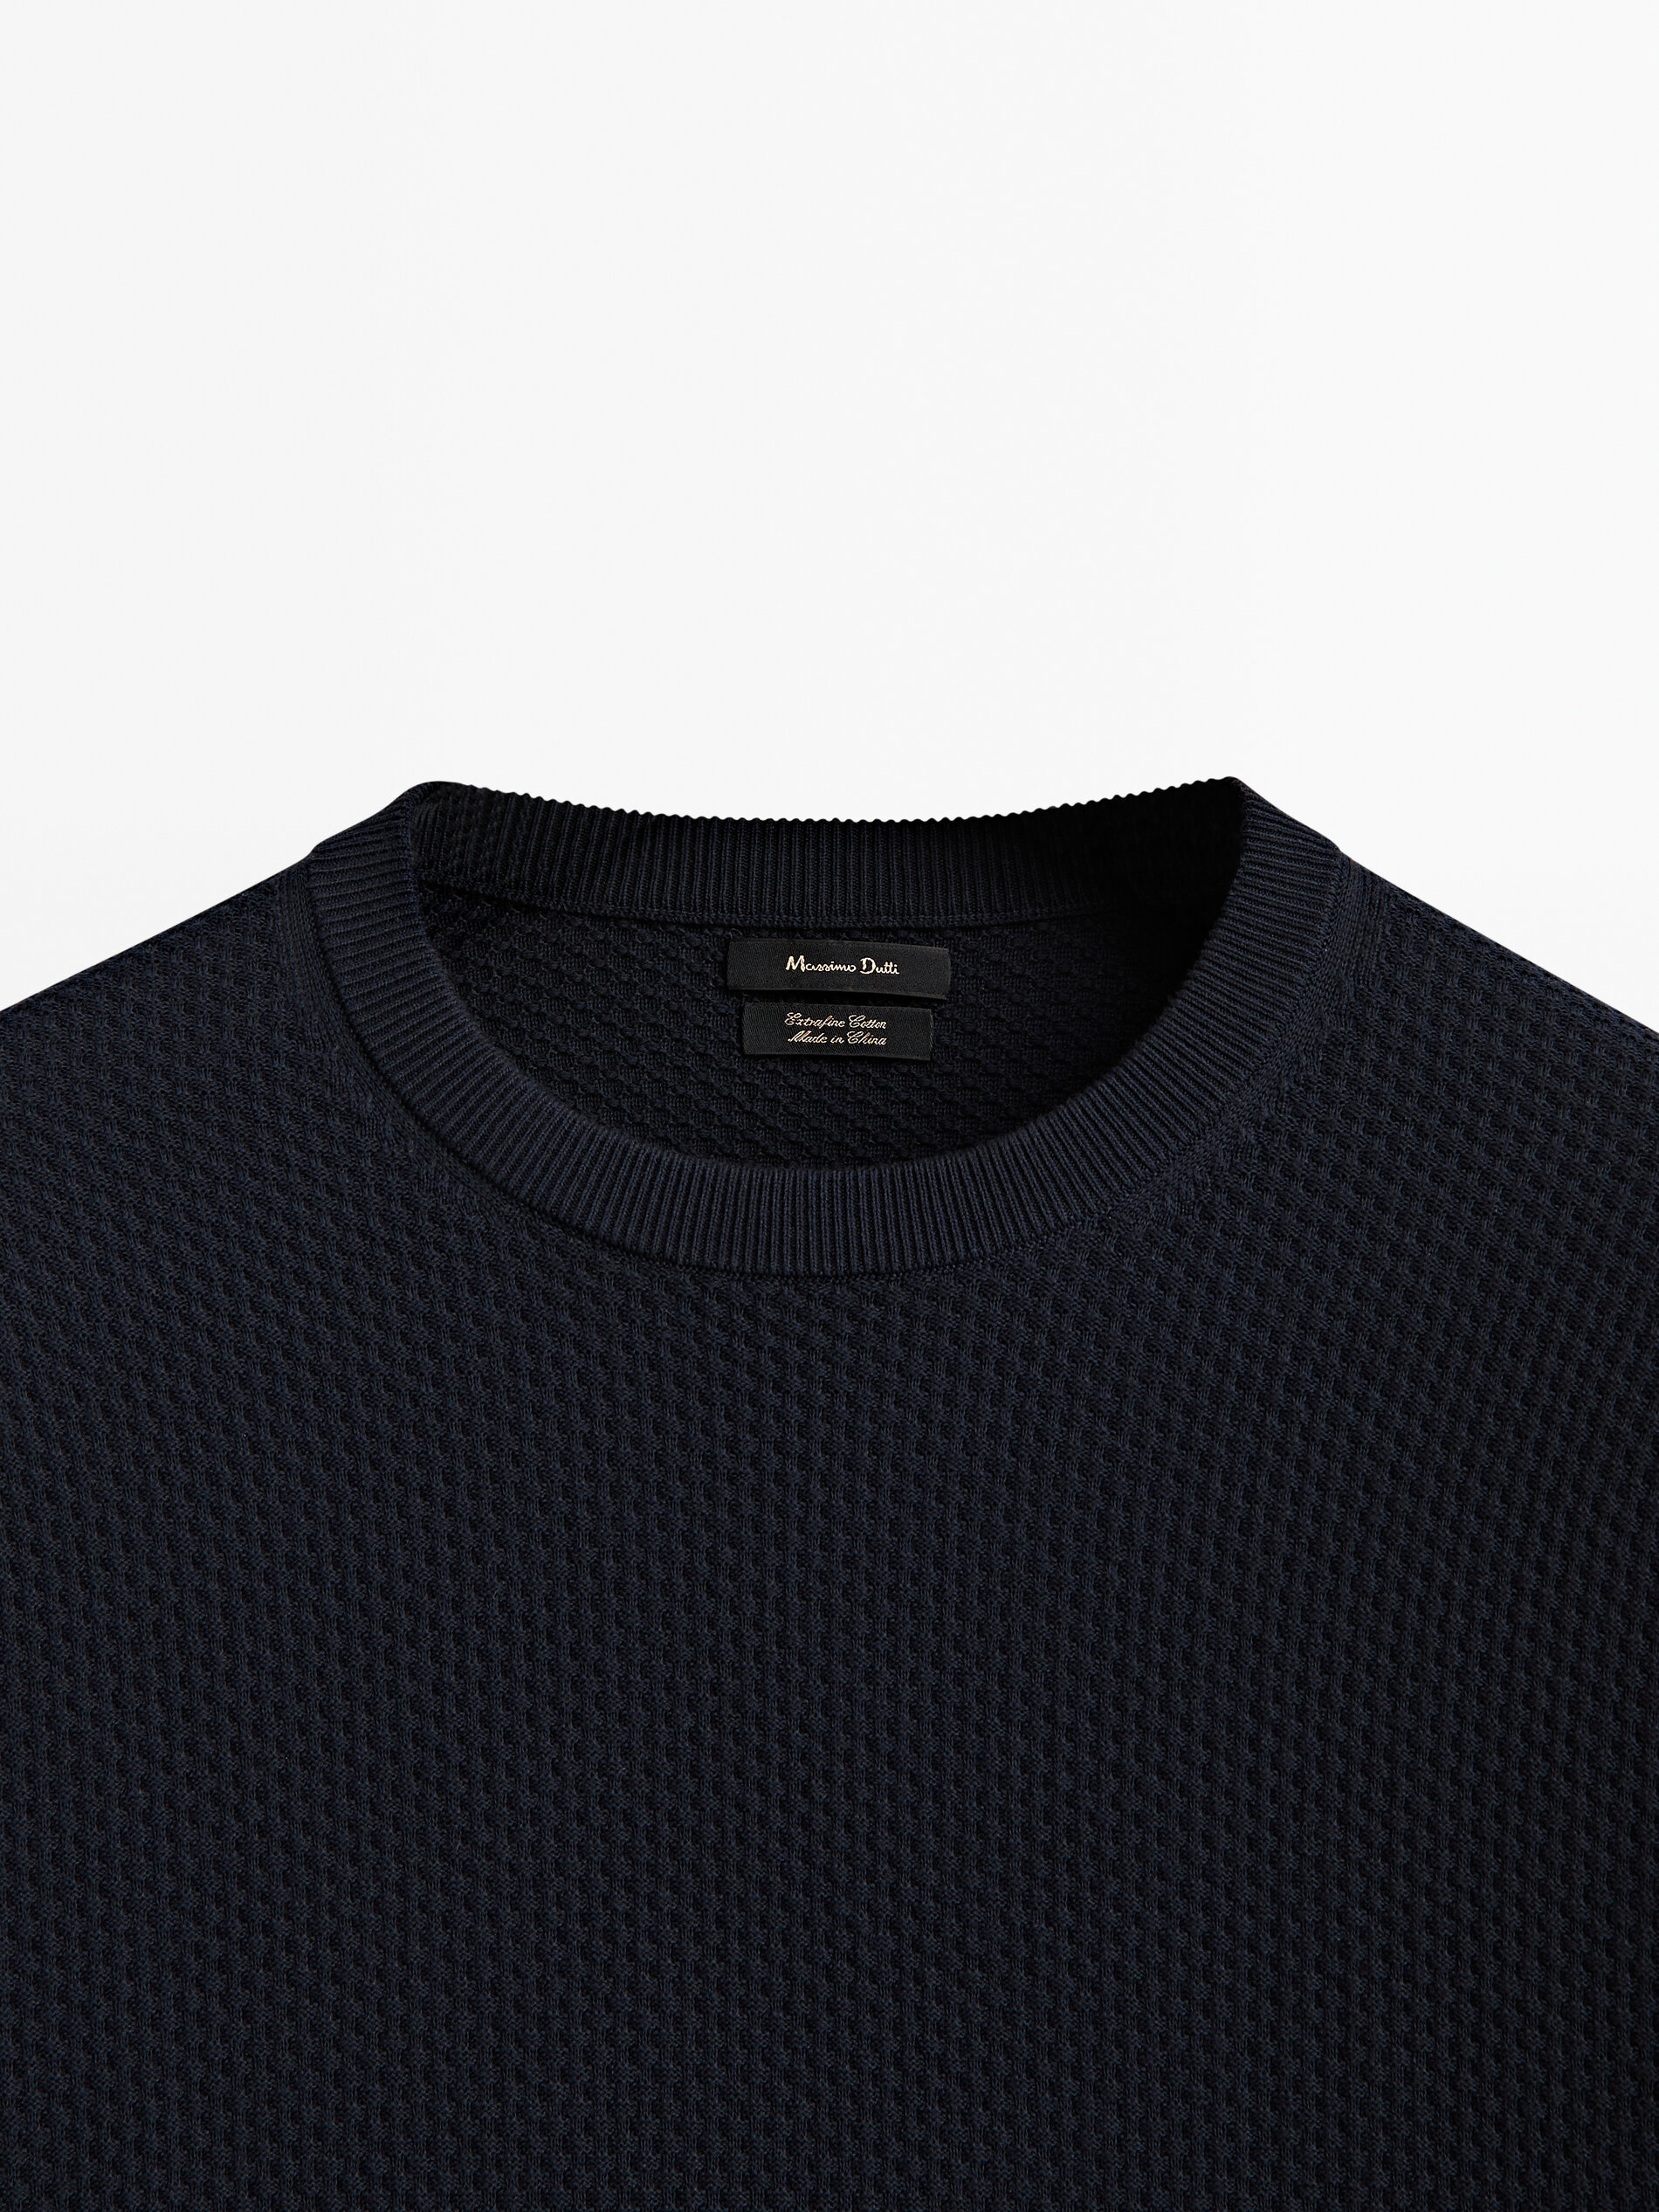 Massimo Dutti - Textured knit crew neck sweater